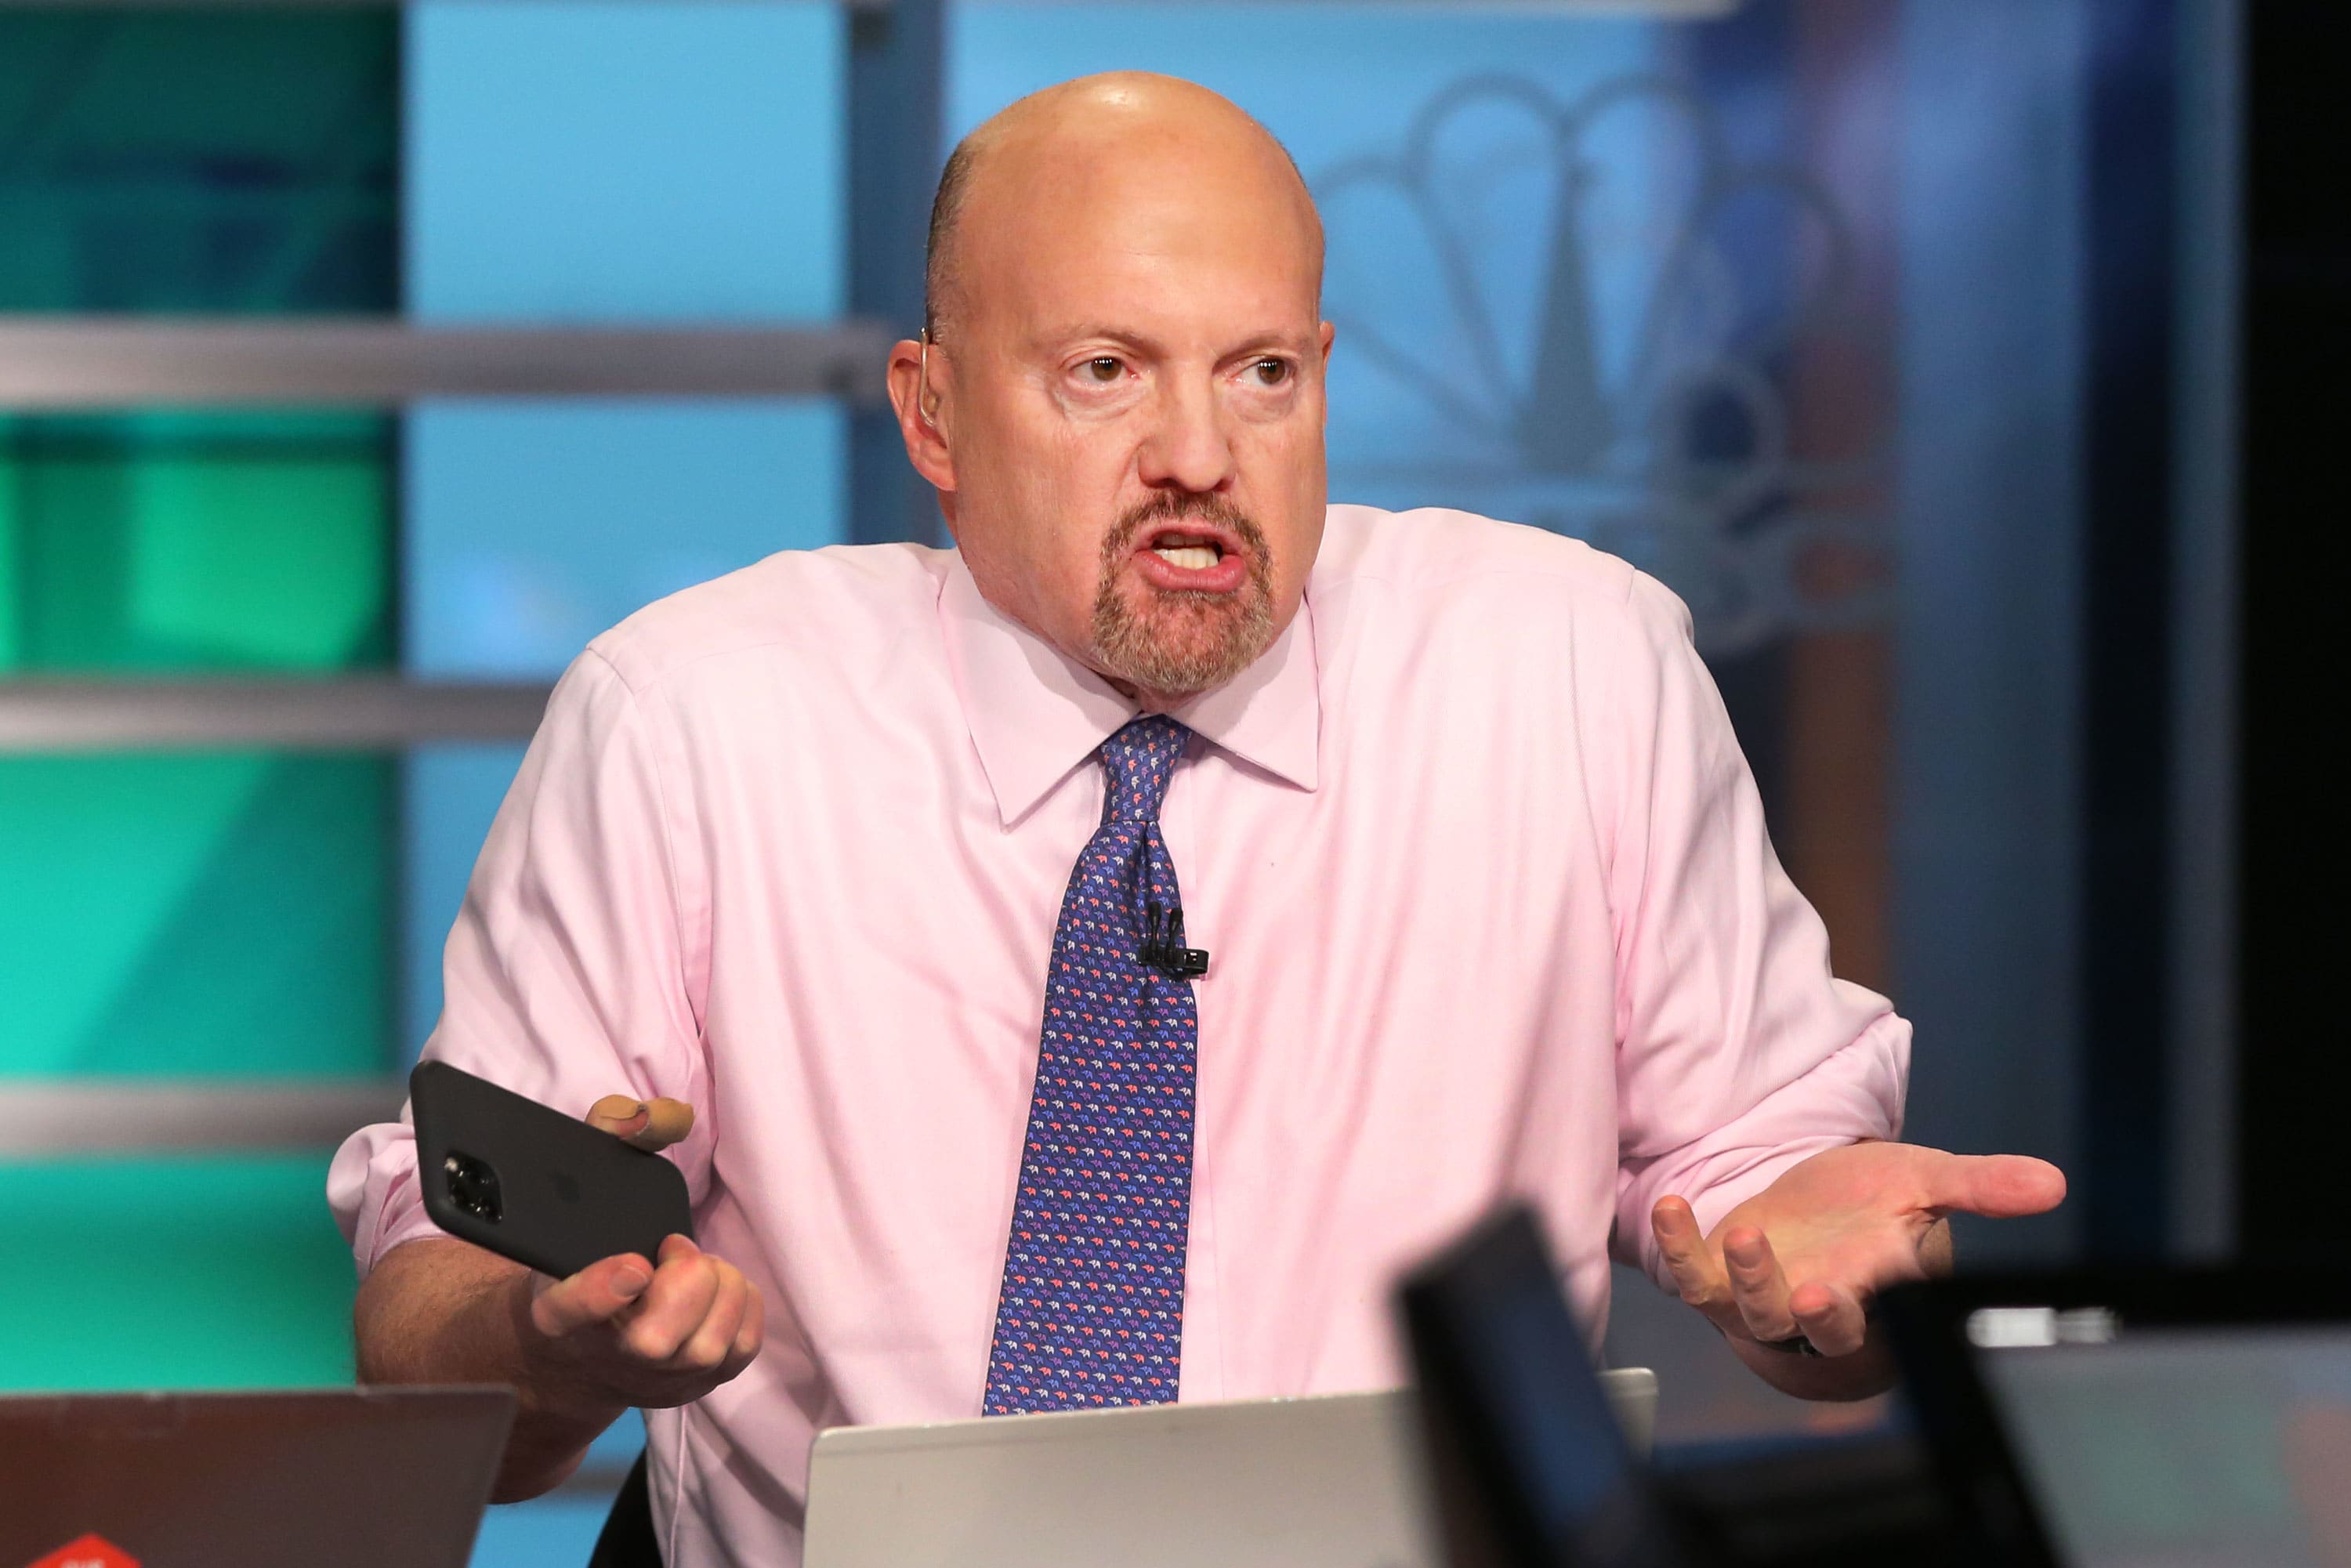 Jim Cramer's Investing Club meeting Thursday: Buy Disney, Salesforce downgrade, Costco earnings